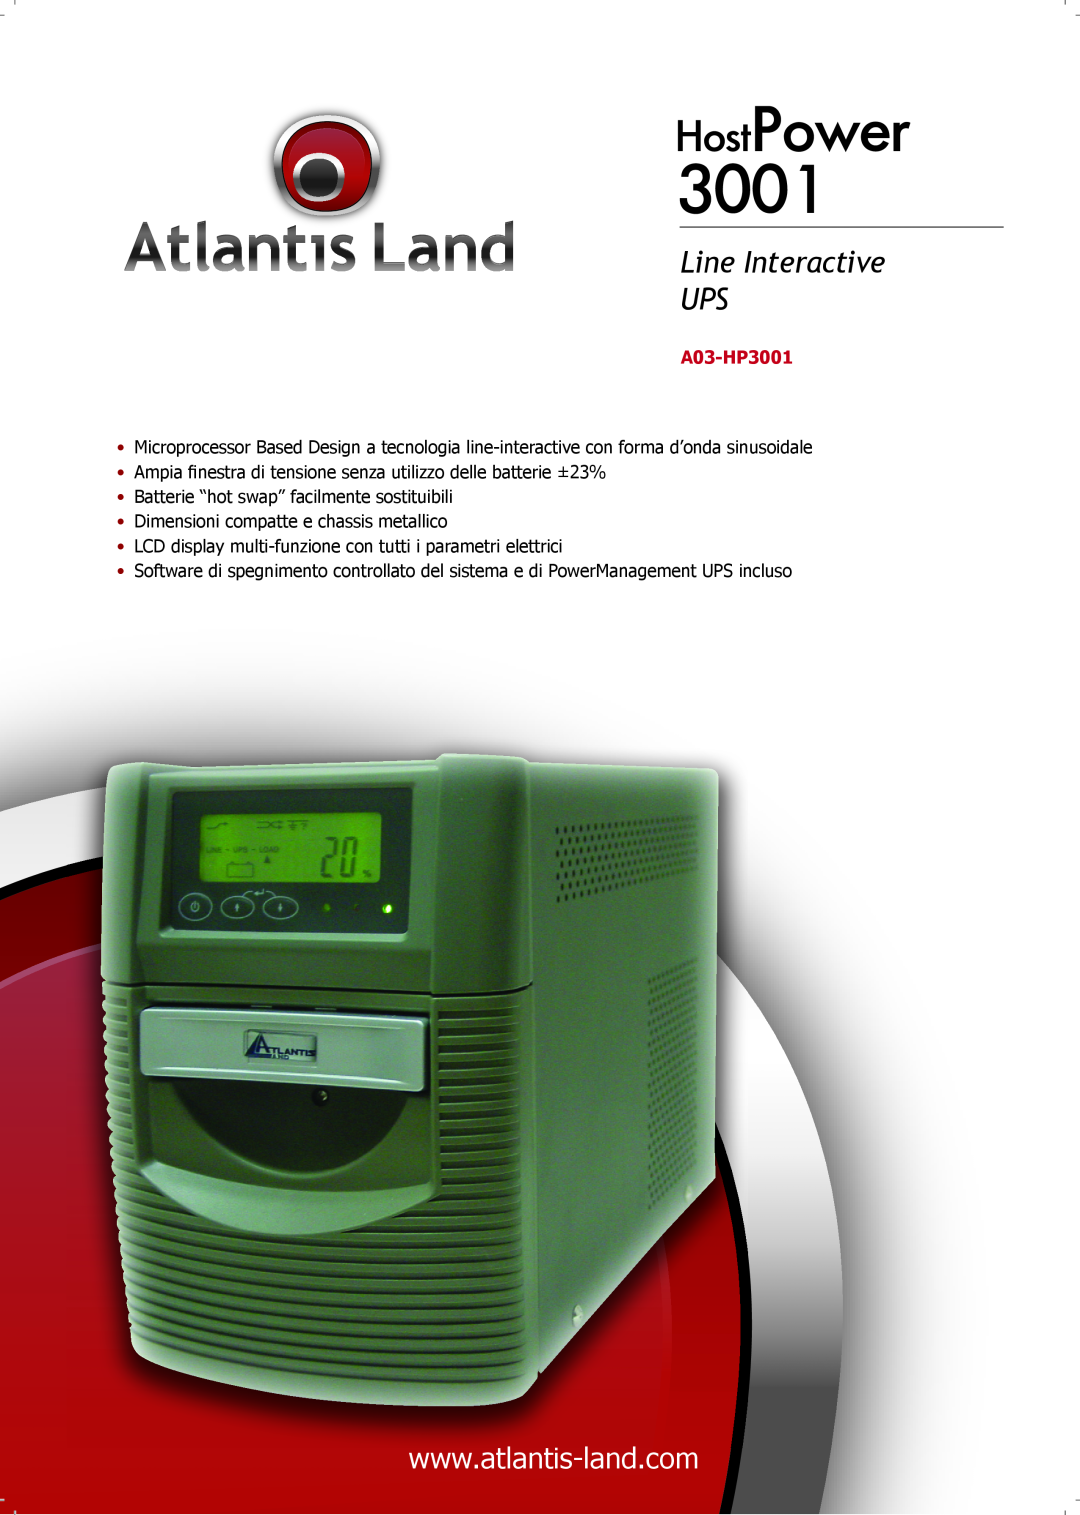 Atlantis Land manual HostPower, Line Interactive UPS, A03-HP3001 